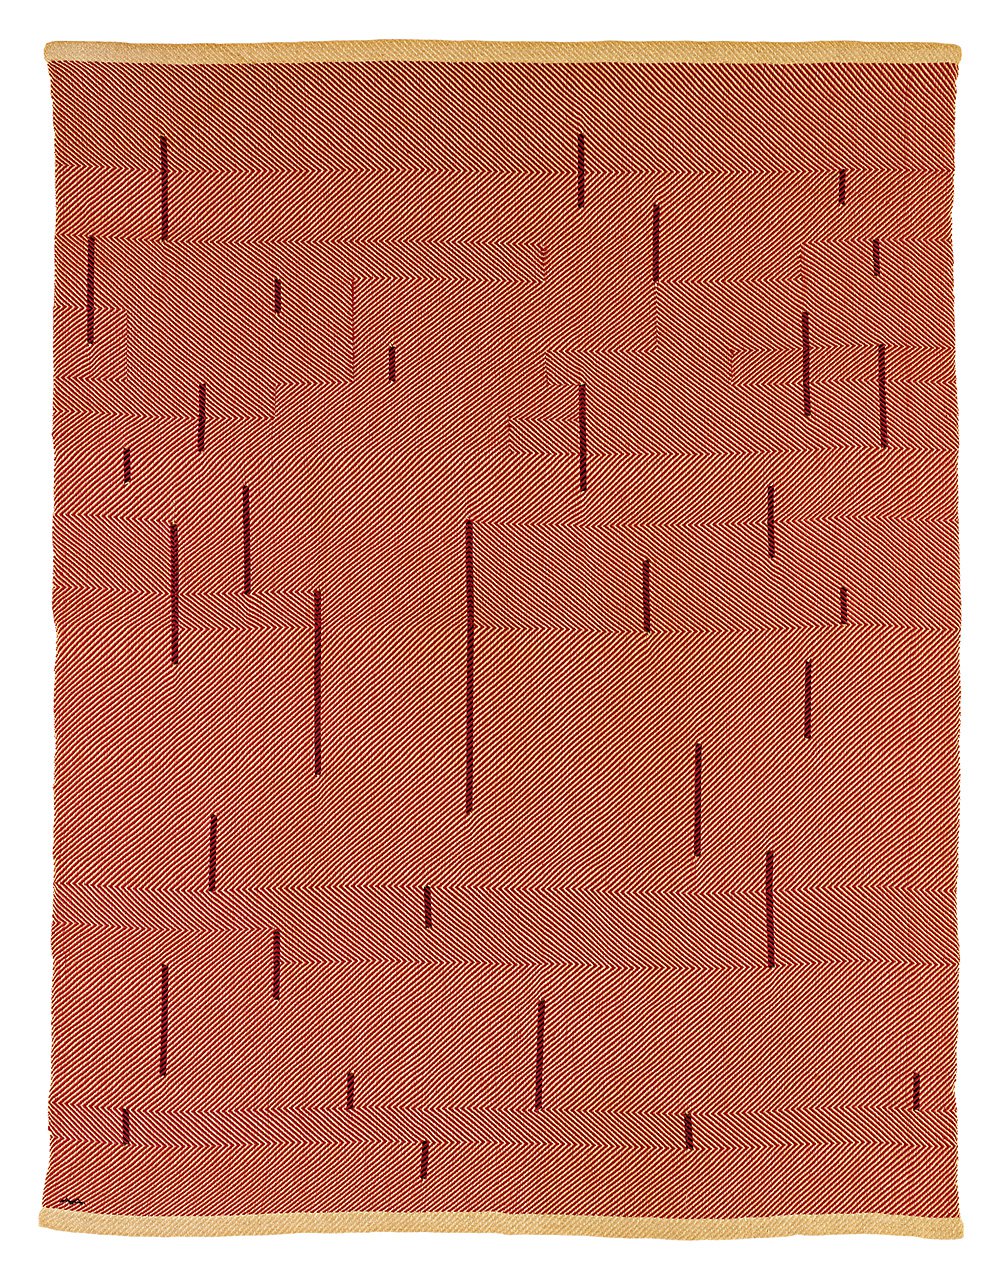 Анни Альберс. «Вертикали». 1946. Хлопок. Фото: The Josef and Anni Albers Foundation and Knoll Textiles/Artists Rights Society (ARS), New York/DACS, London, 2018